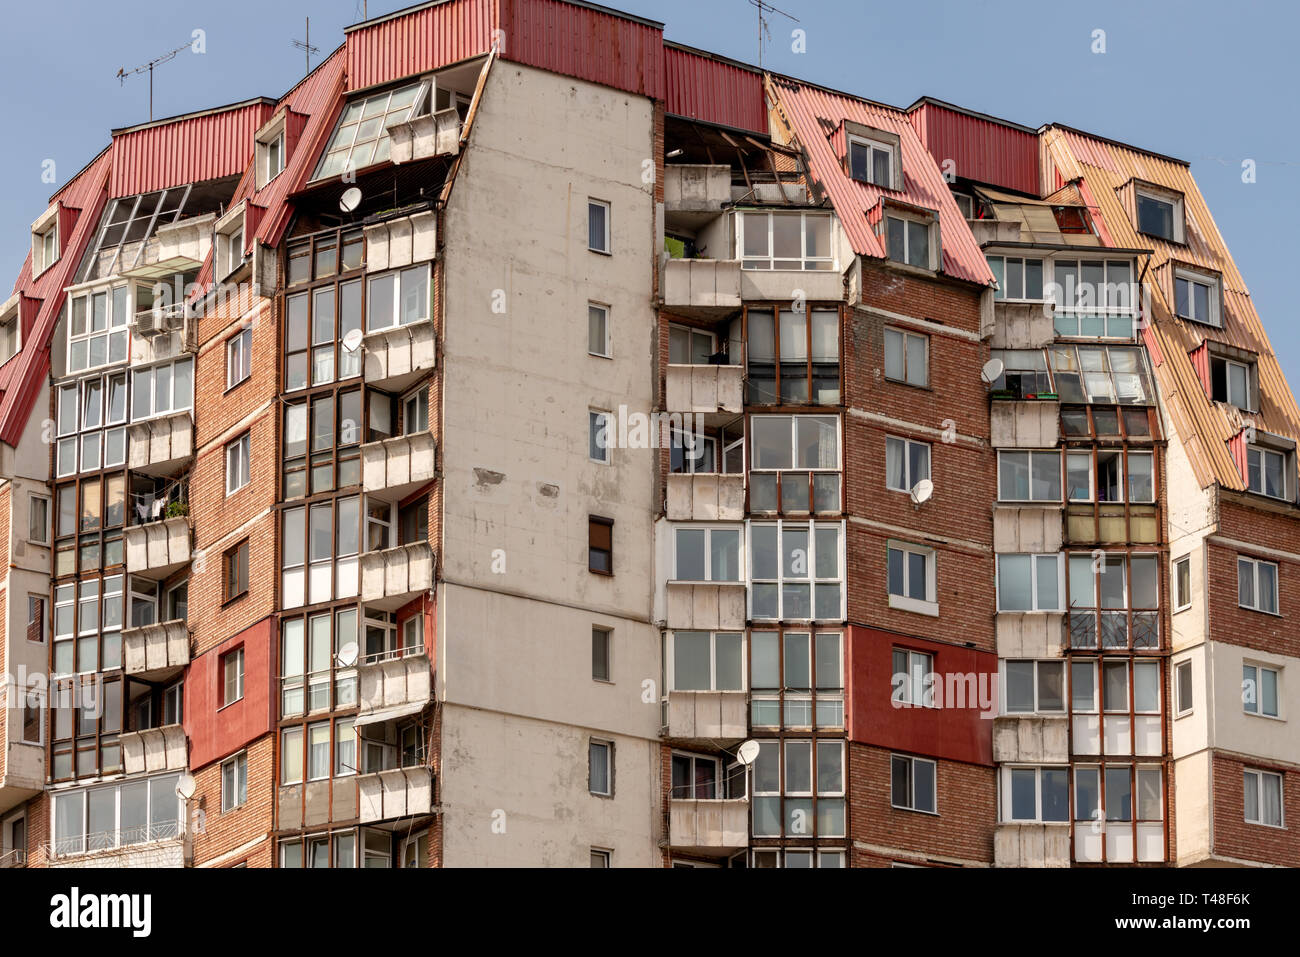 Arquitectura Brutalist edificio alto bloque de apartamentos. Europa oriental brutalismo arquitectura de gran altura. Sofía, Bulgaria. Foto de stock